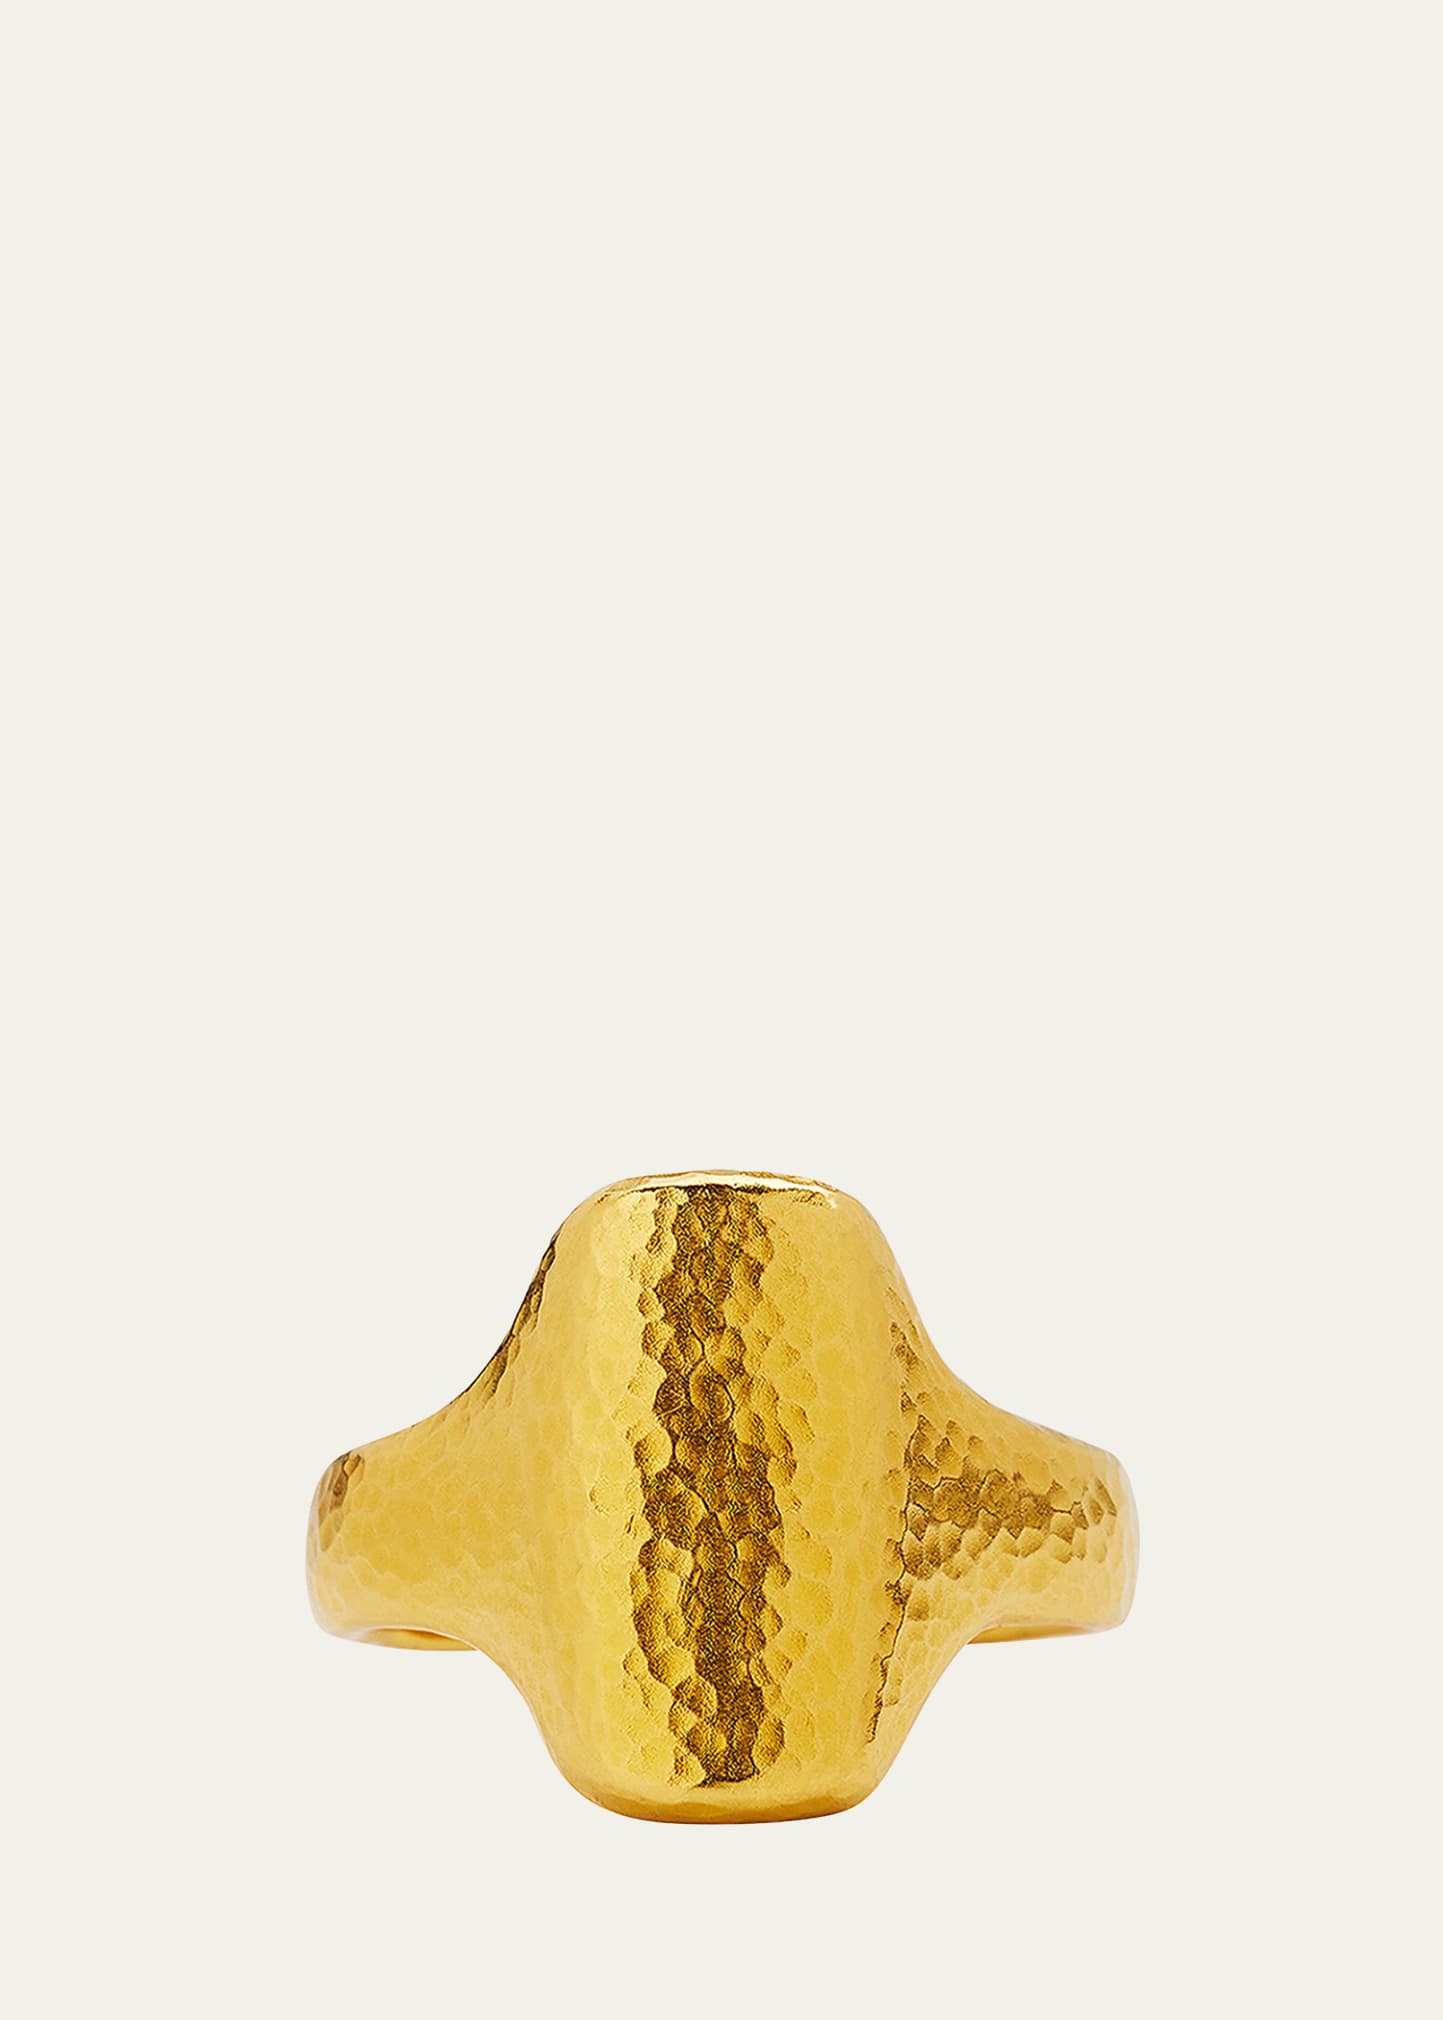 Gurhan Men's Hammered 22K Yellow Gold Signet Ring